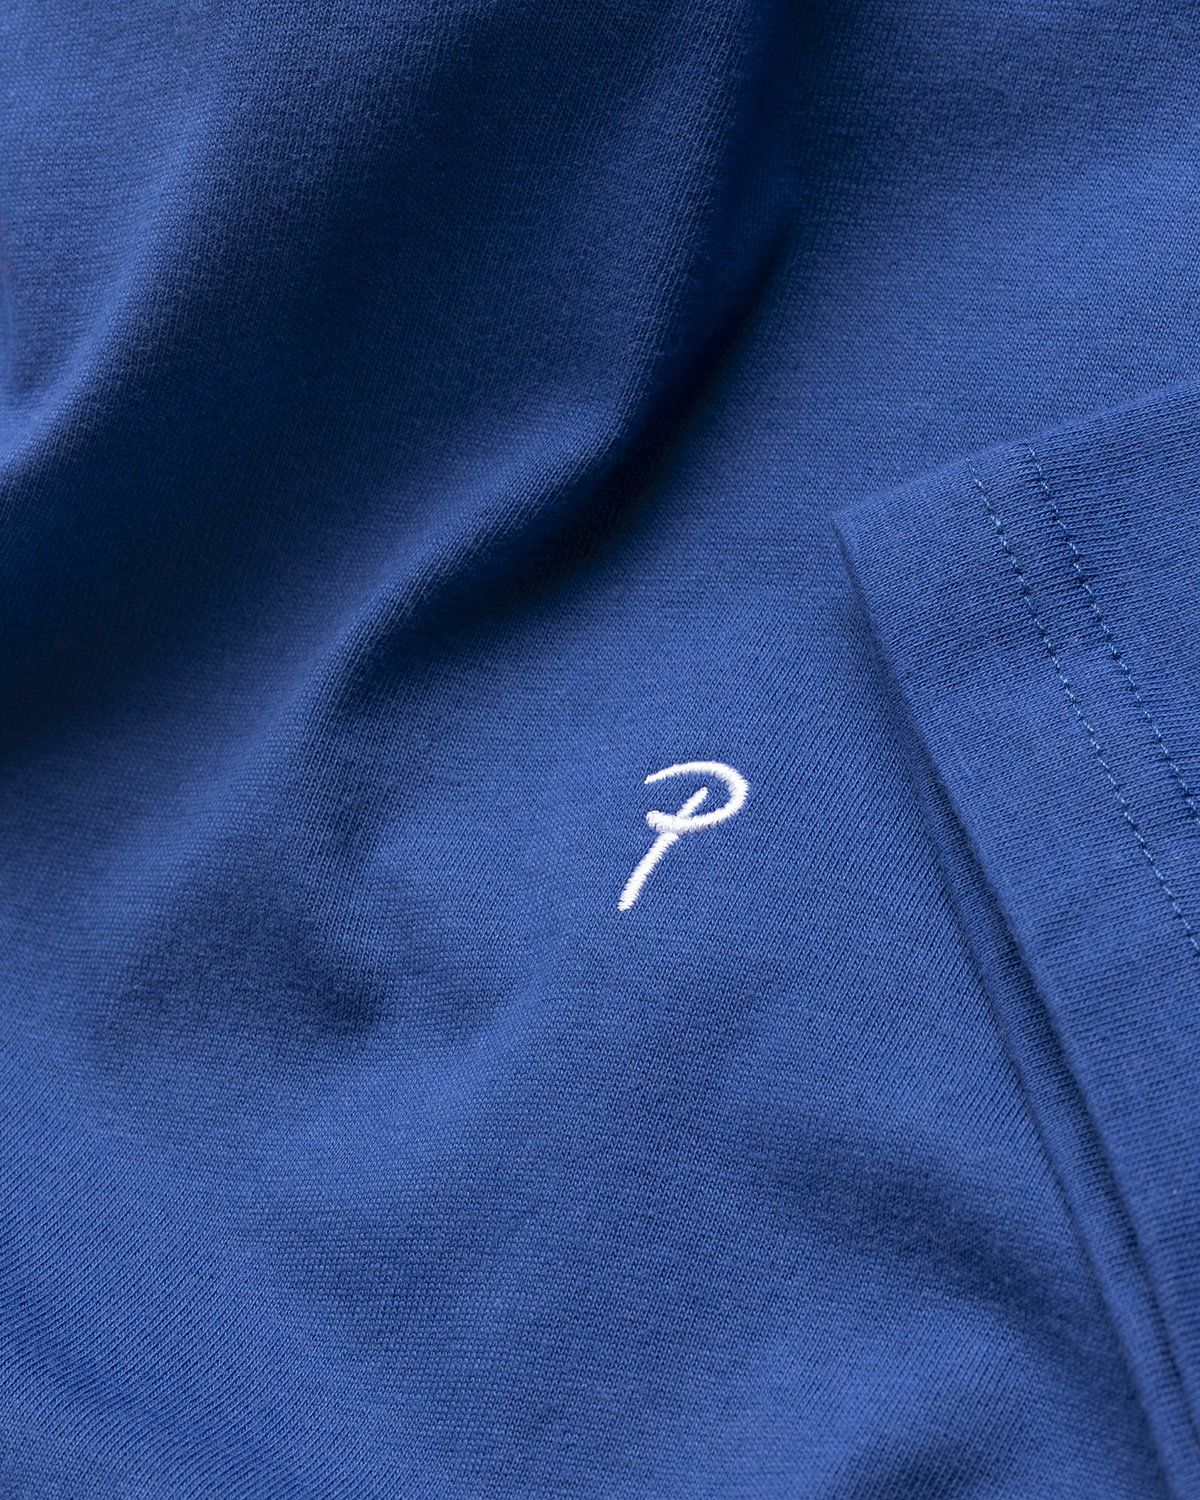 Patta – Basic Script P T-Shirt Monaco Blue | Highsnobiety Shop